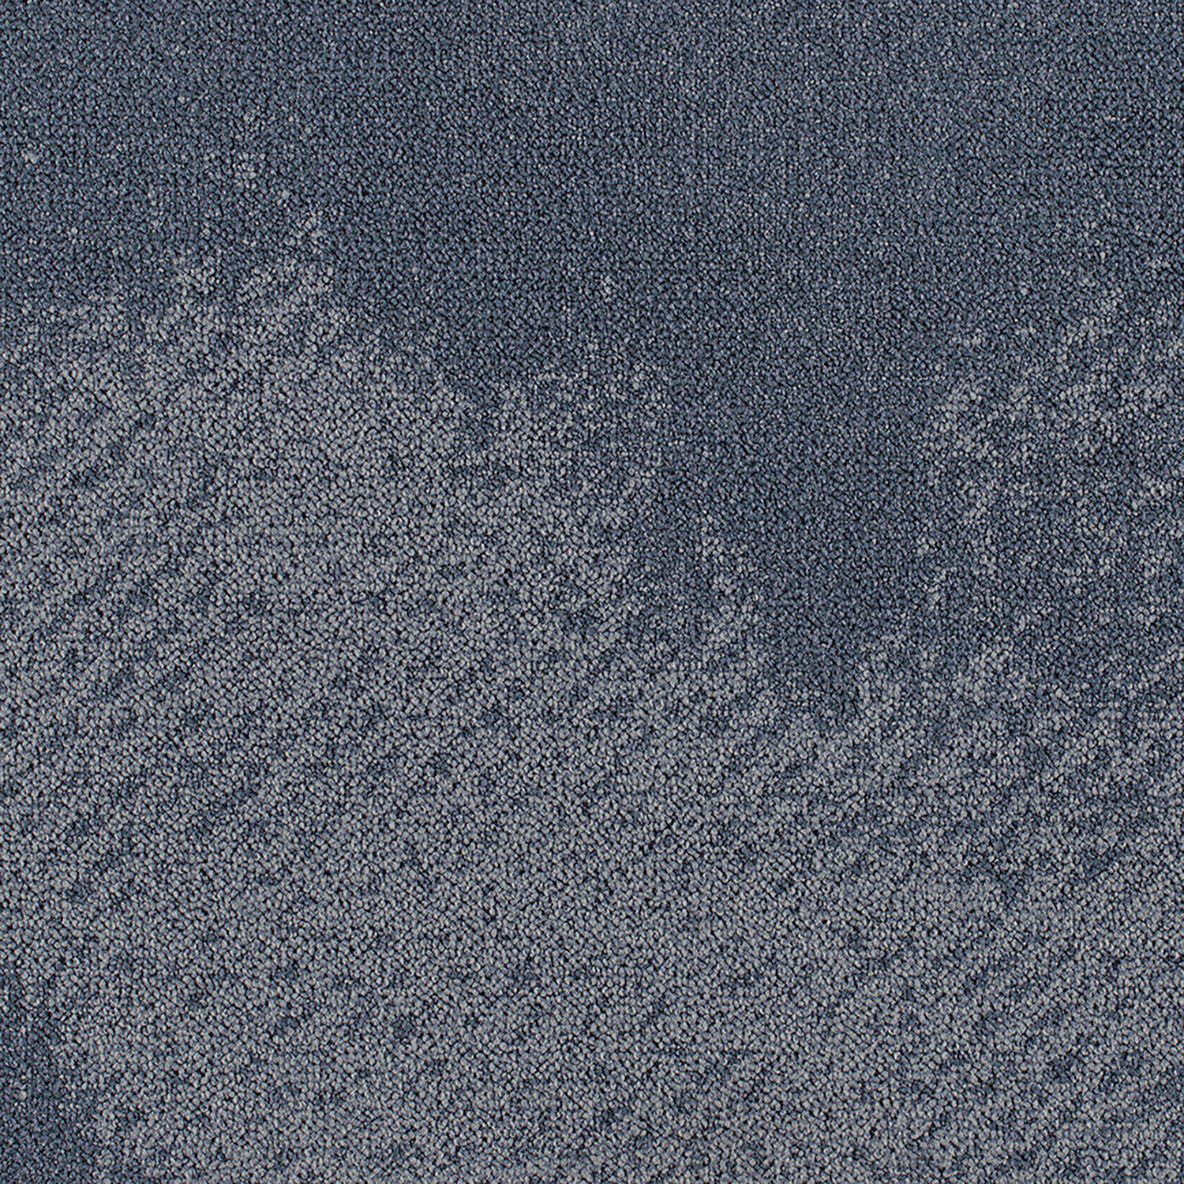 Burnished Commercial Carpet Tile .325 Inch x 50x50 cm Per Tile close up of blueprint color